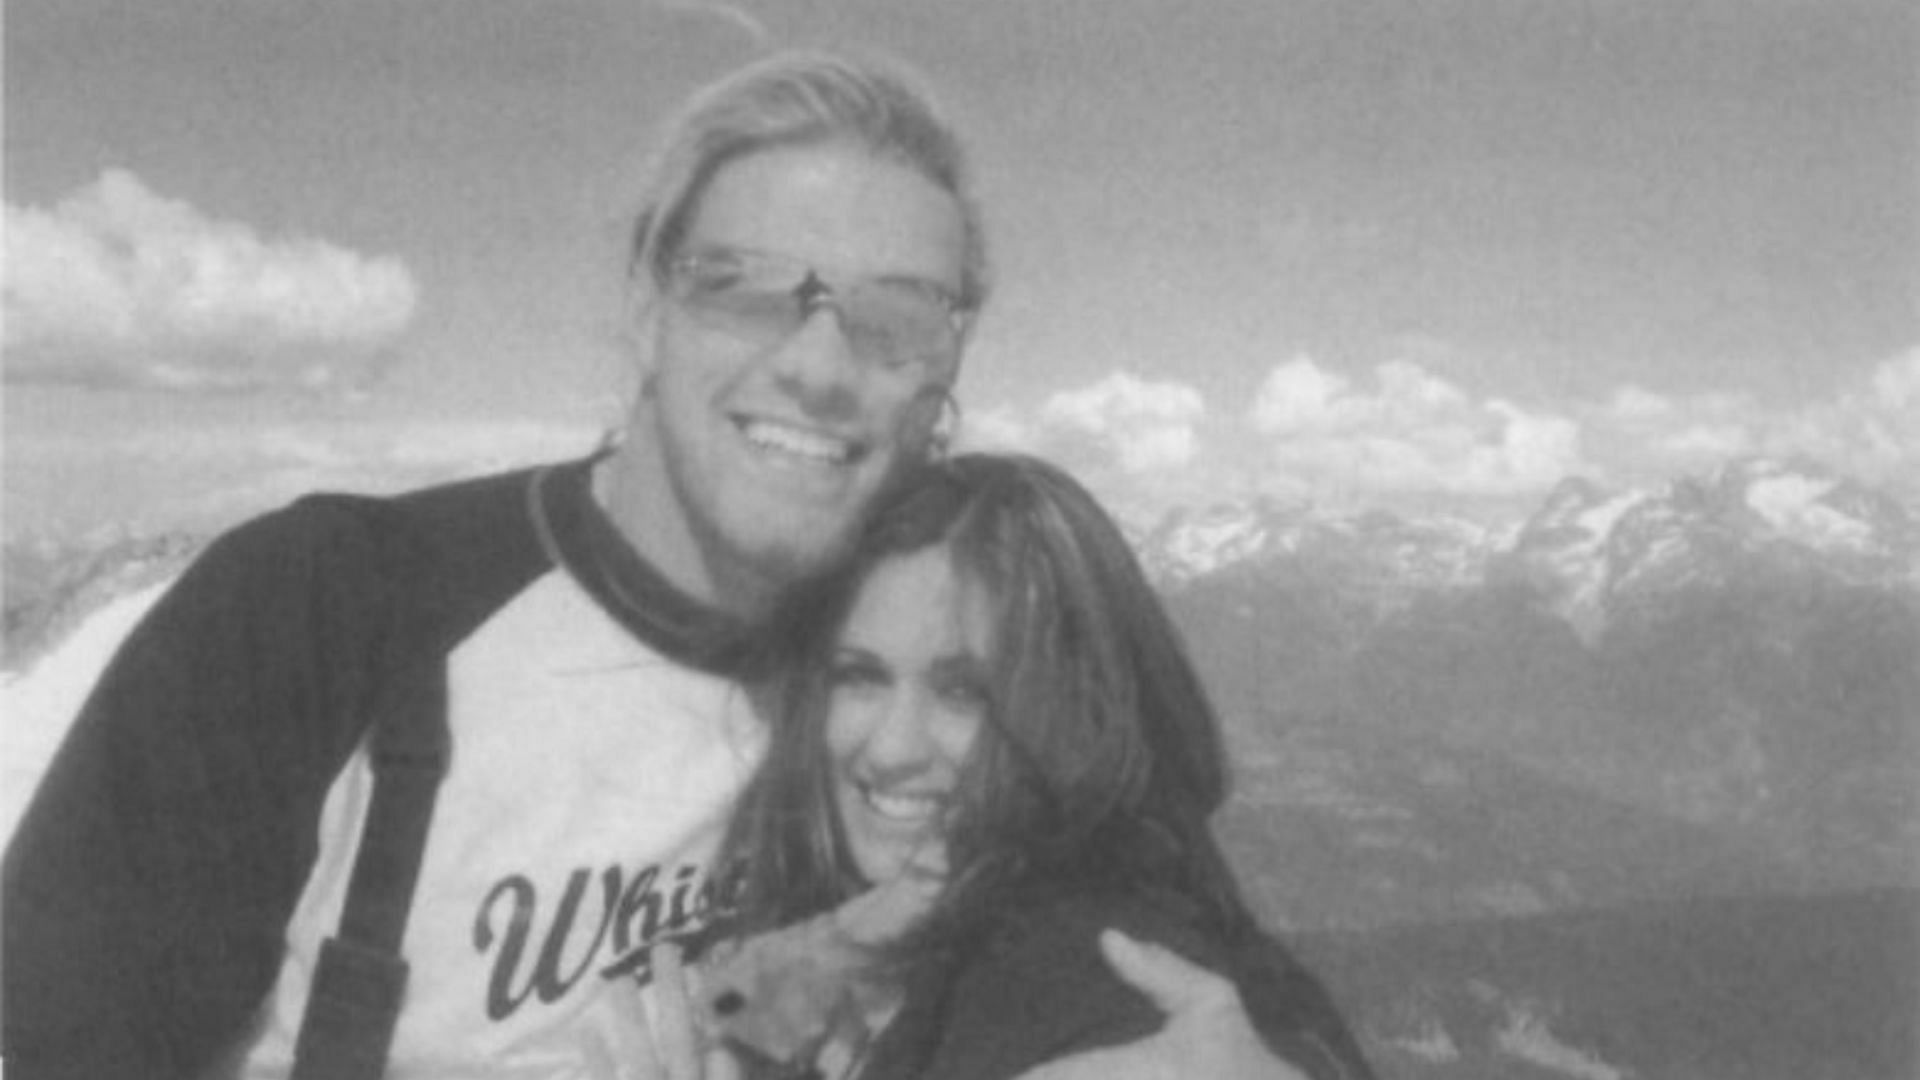 Edge with his ex-wife, Lisa Ortiz